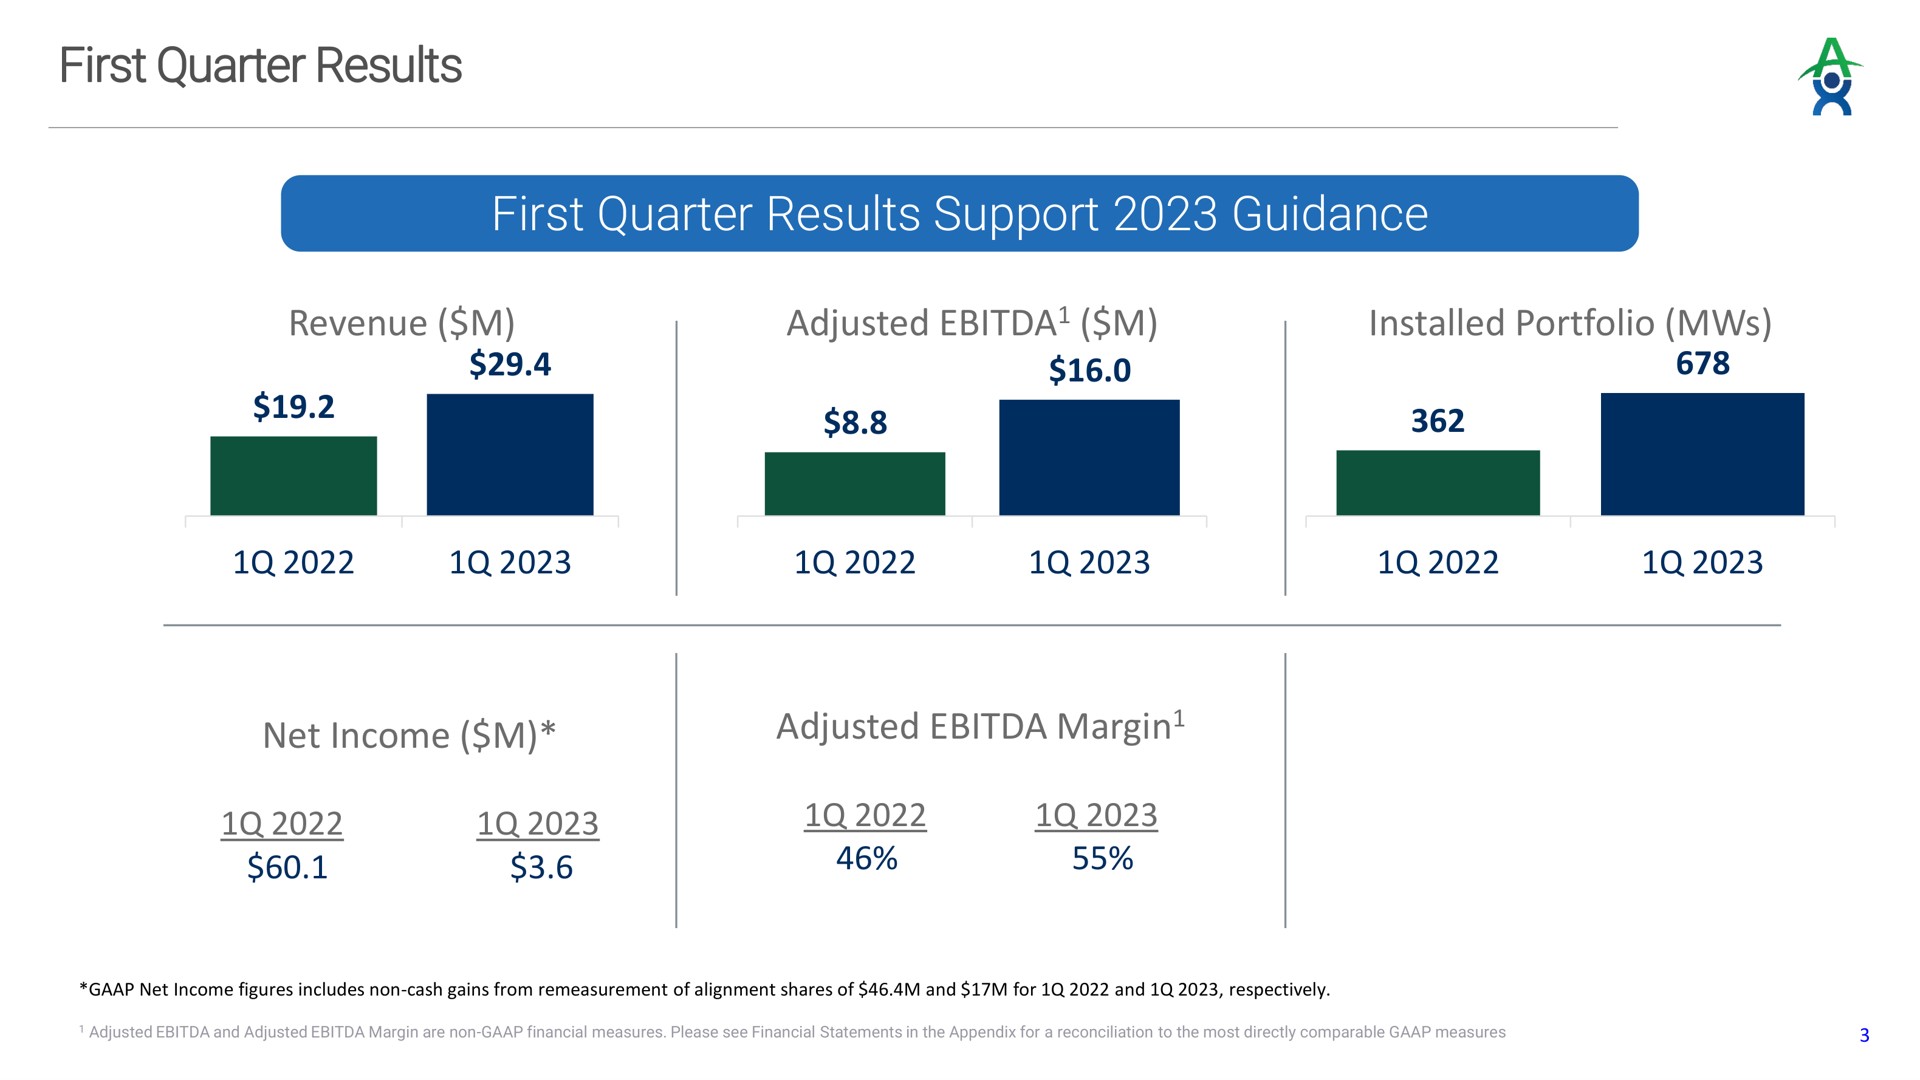 first quarter results first quarter results support guidance revenue adjusted portfolio net income adjusted margin | Altus Power